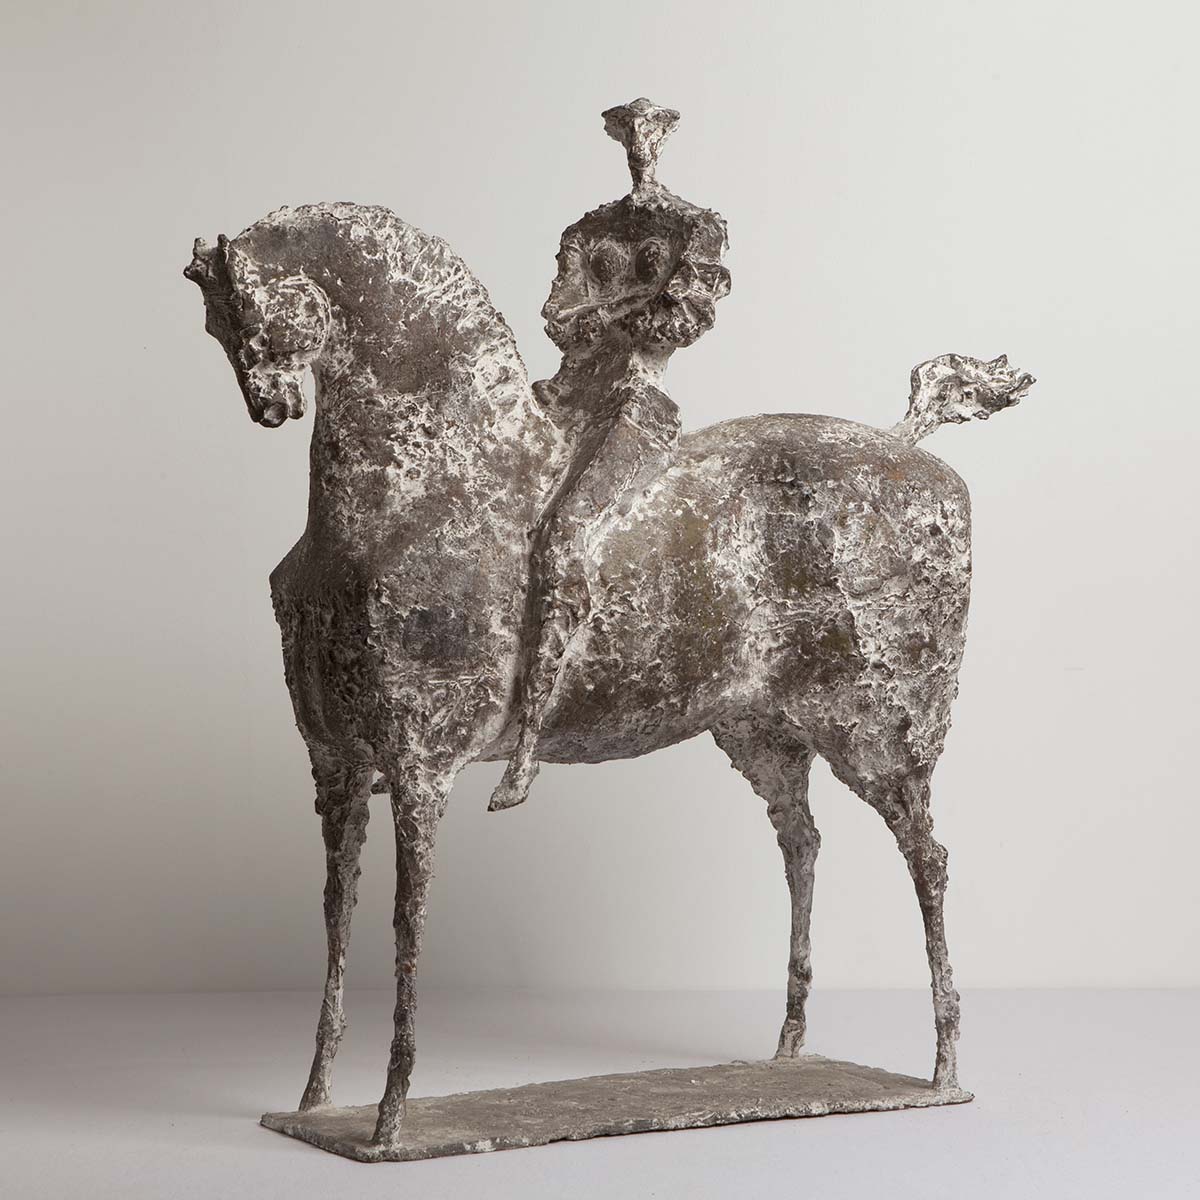 Nina Terno, Rider, 1984, patinated bronze, 63 x 60 x 16,5 cm. Photo: Saara Salmi